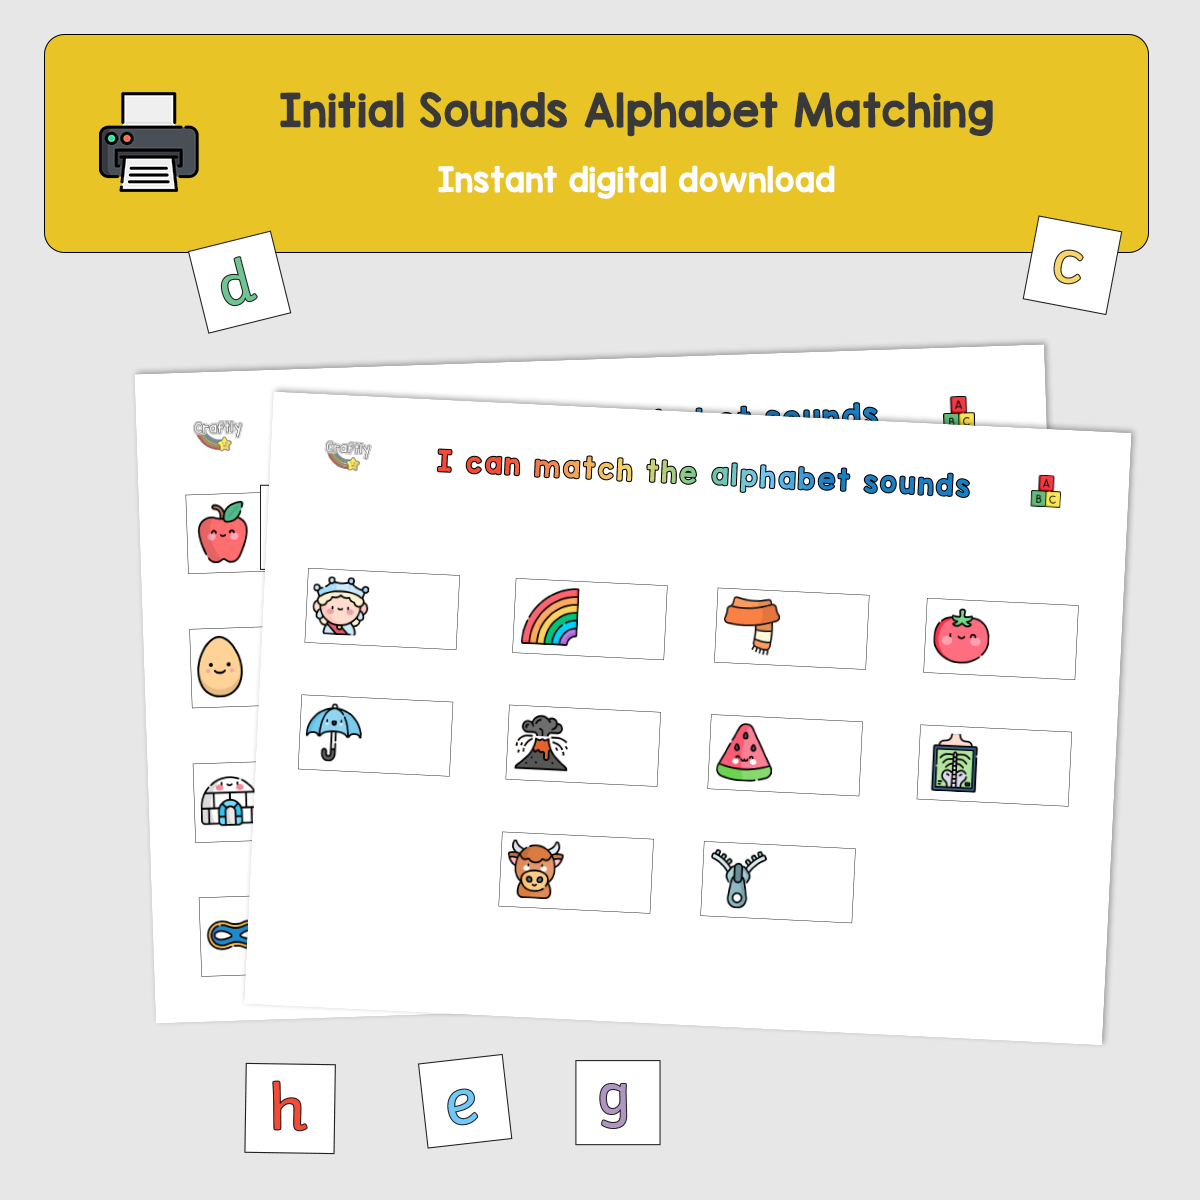 Initial Sound Alphabet Matching